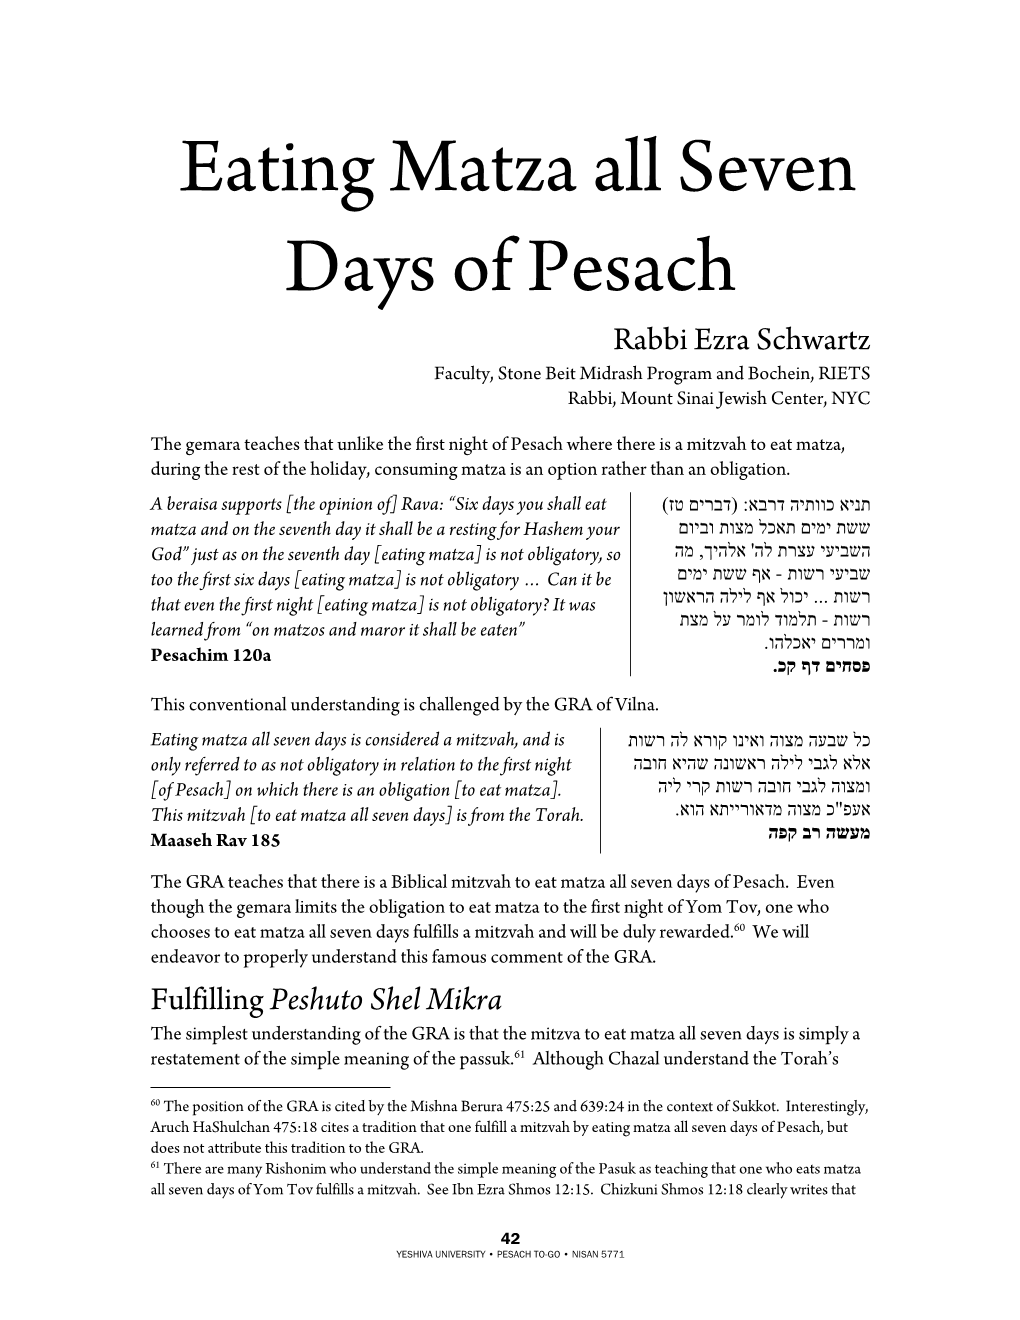 Eating Matza All Seven Days of Pesach Rabbi Ezra Schwartz Faculty, Stone Beit Midrash Program and Bochein, RIETS Rabbi, Mount Sinai Jewish Center, NYC